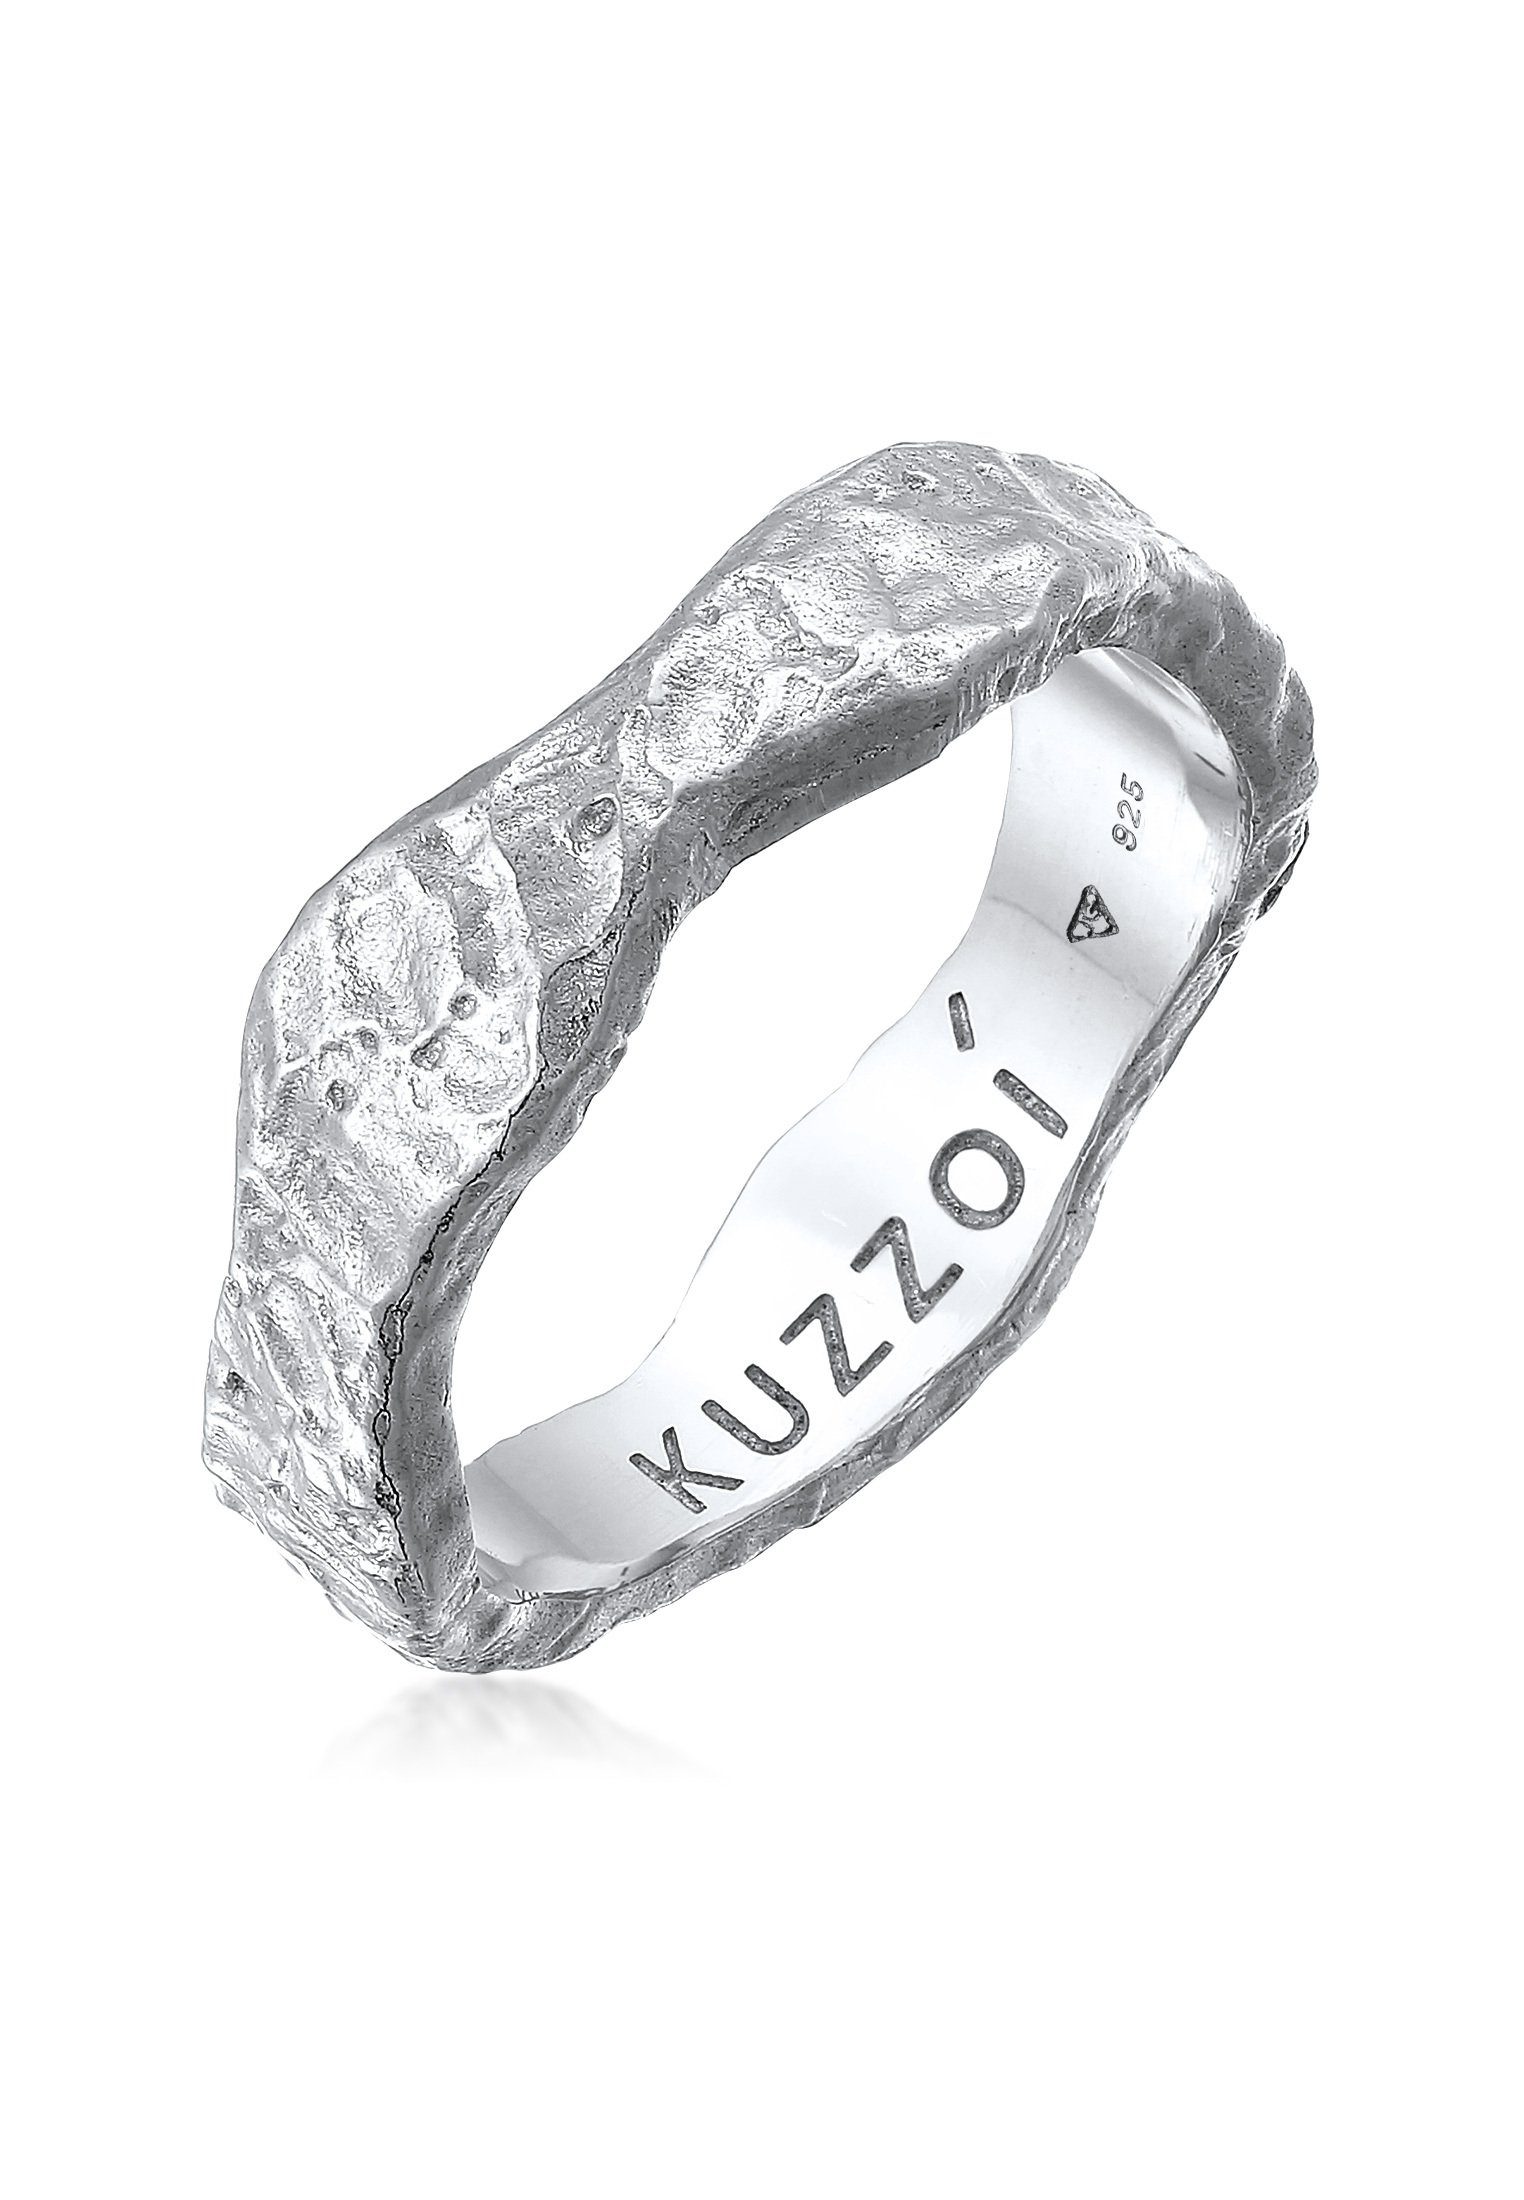 Kuzzoi Silberring Struktur Silber, Herren Gehämmertes mit Oberfläche 925 organic Accessoire Organic Bandring